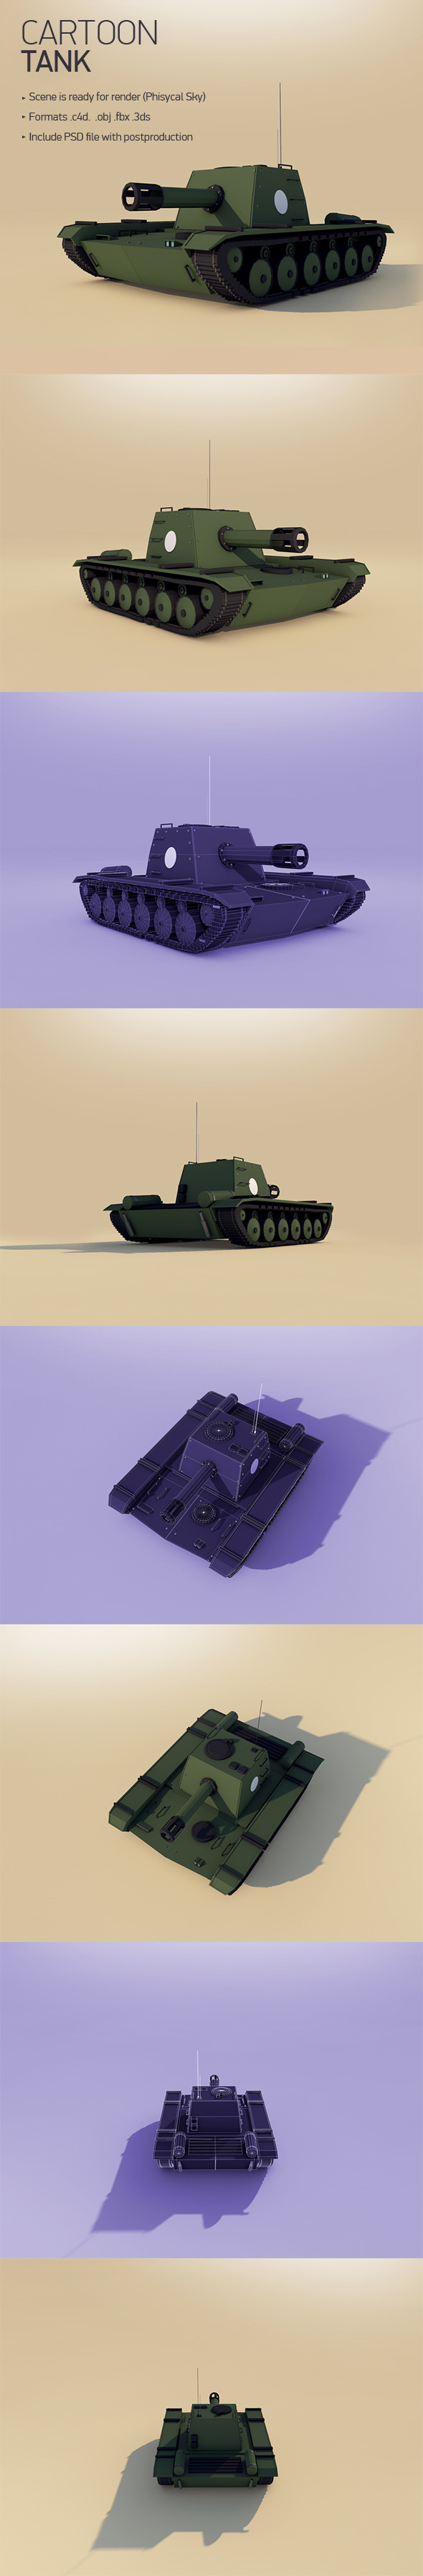 Cartoon Tank - 3Docean 12253475